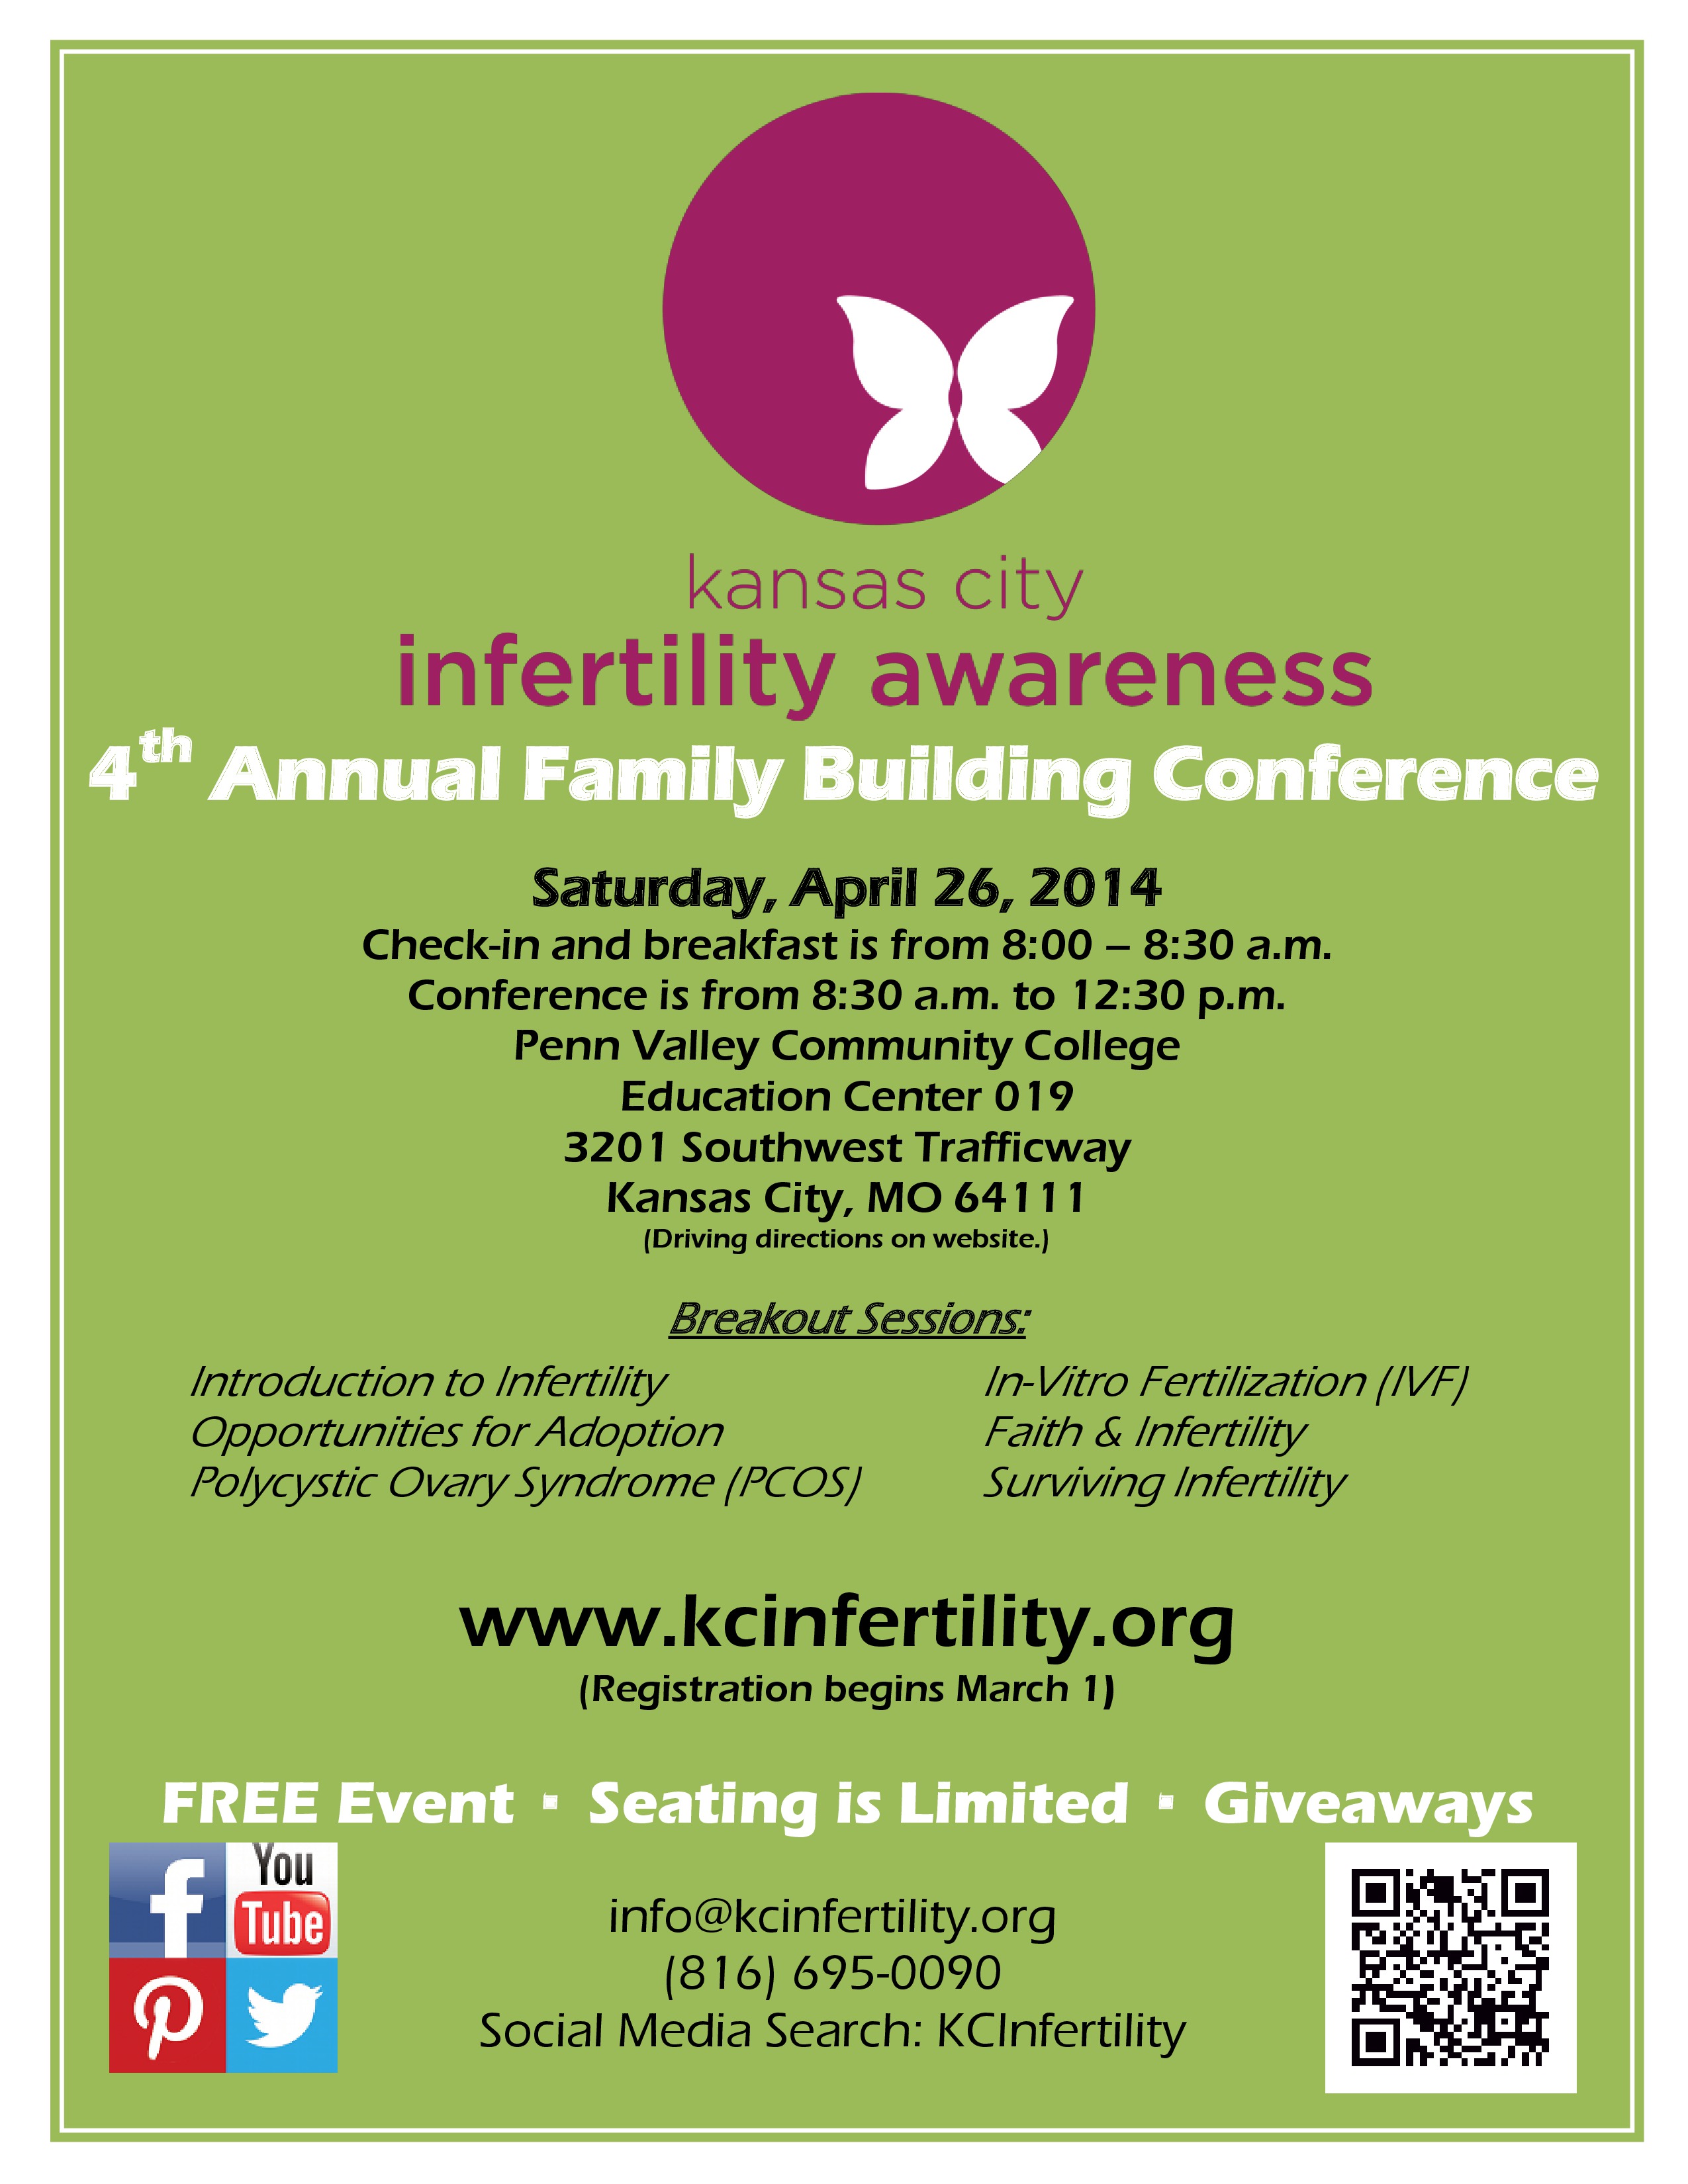 Kansas City Infertility Awareness Conference